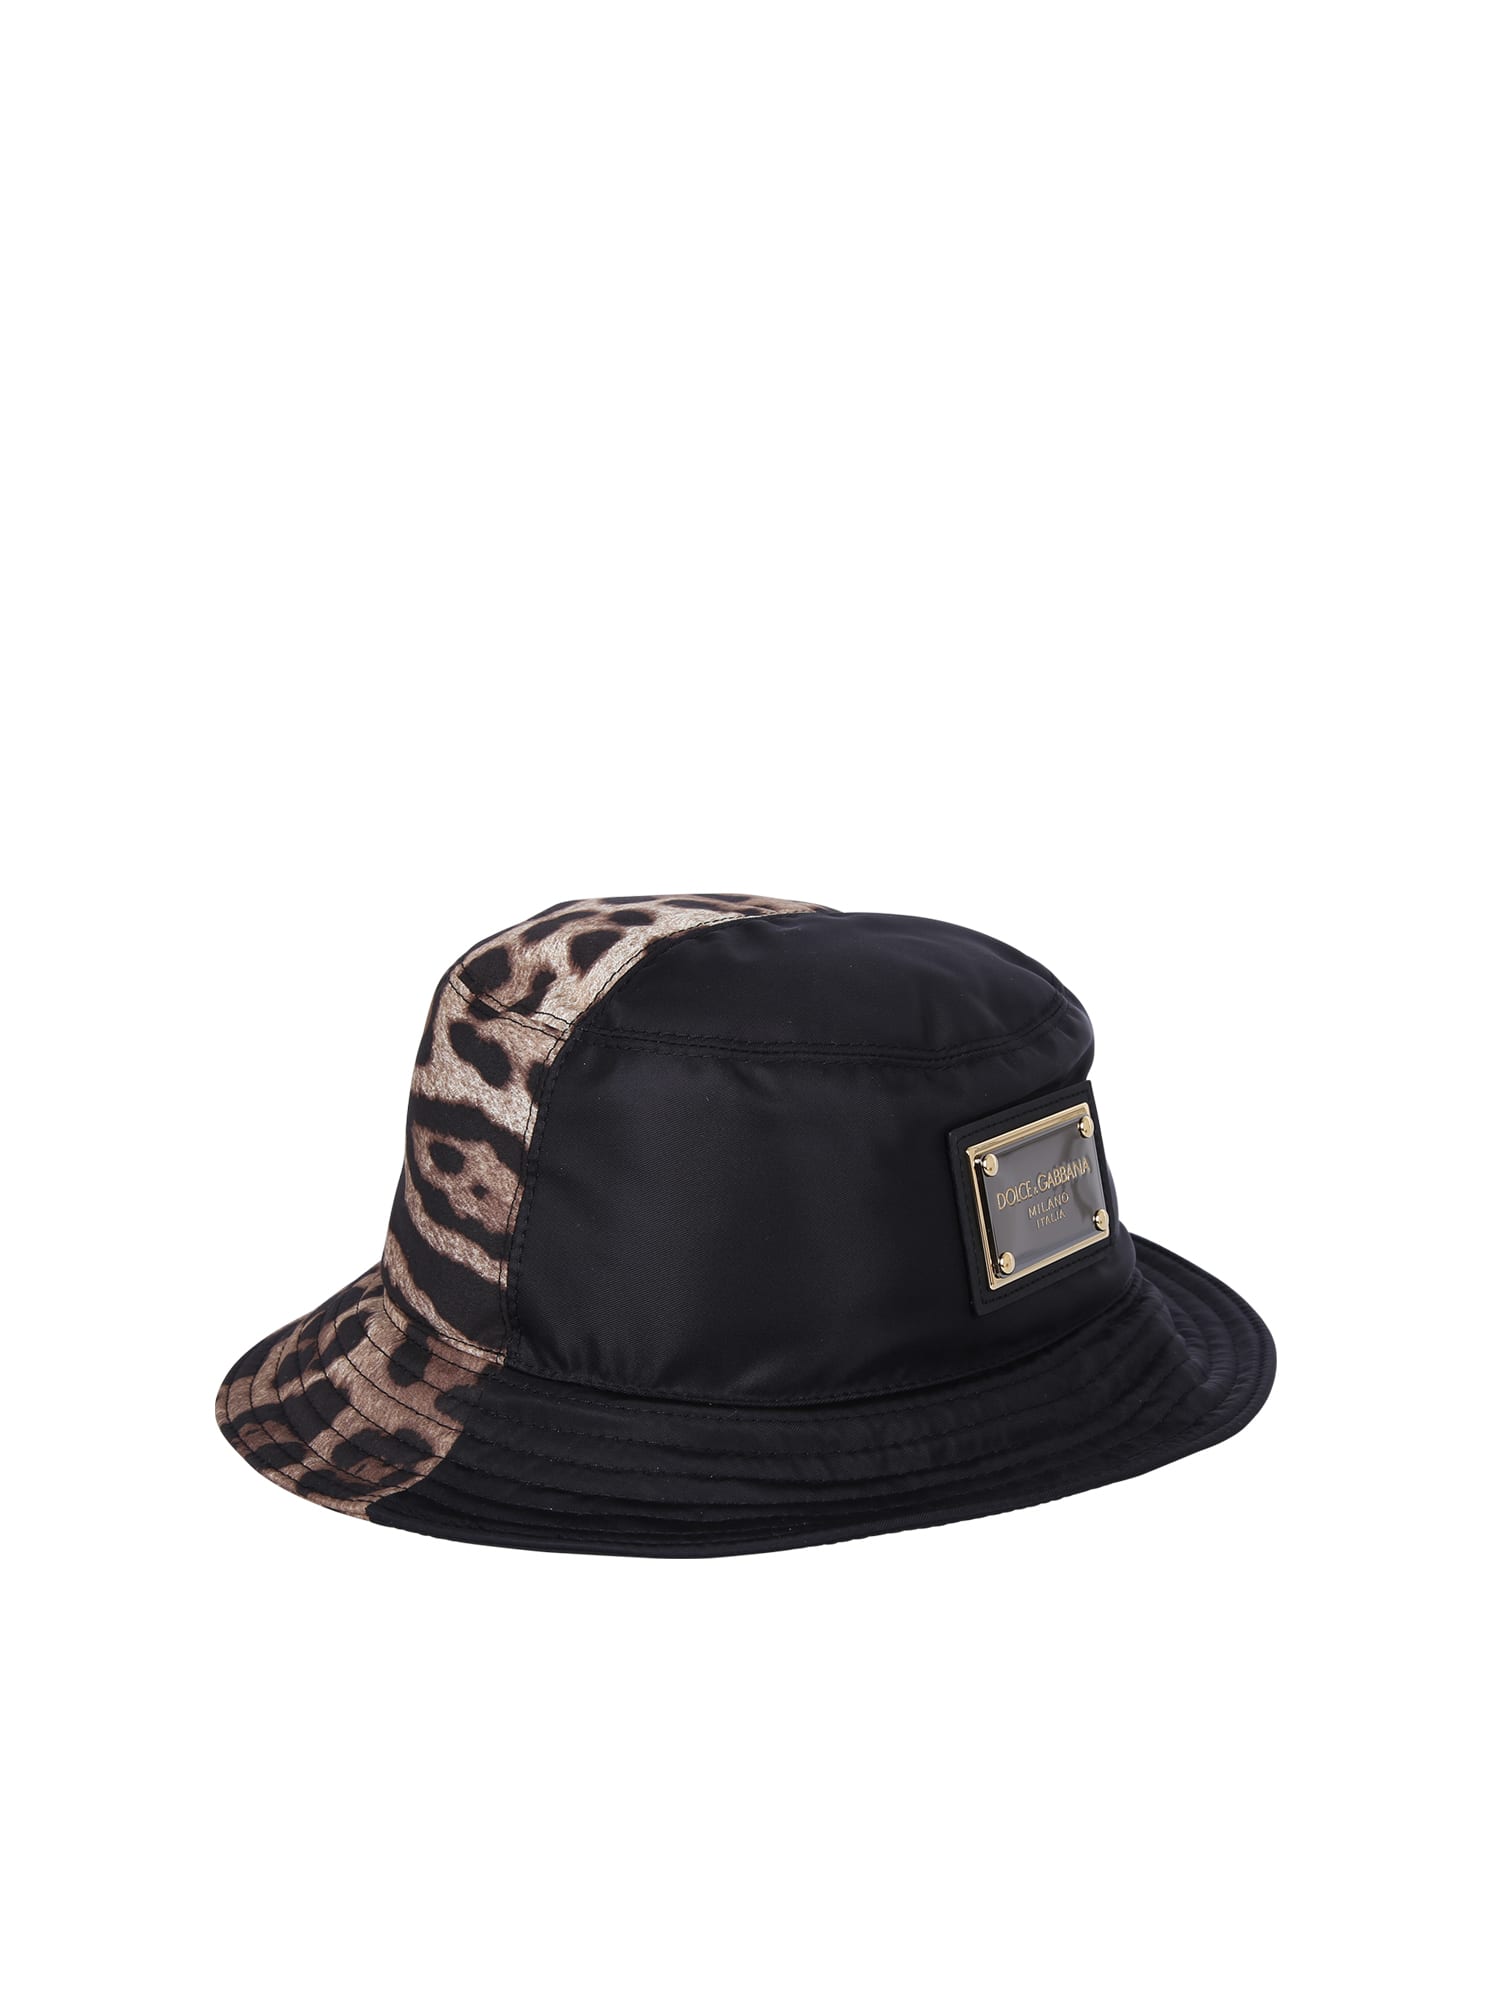 Dolce & Gabbana Leopard Print Bucket Hat